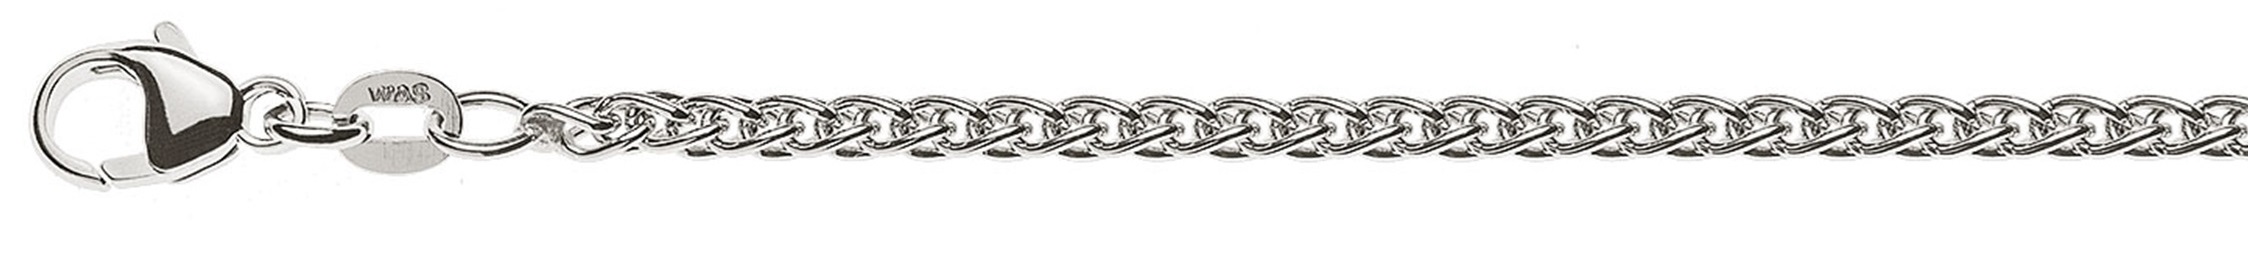 AURONOS Prestige Collier or blanc 18K chaîne câble 42cm 2.5mm